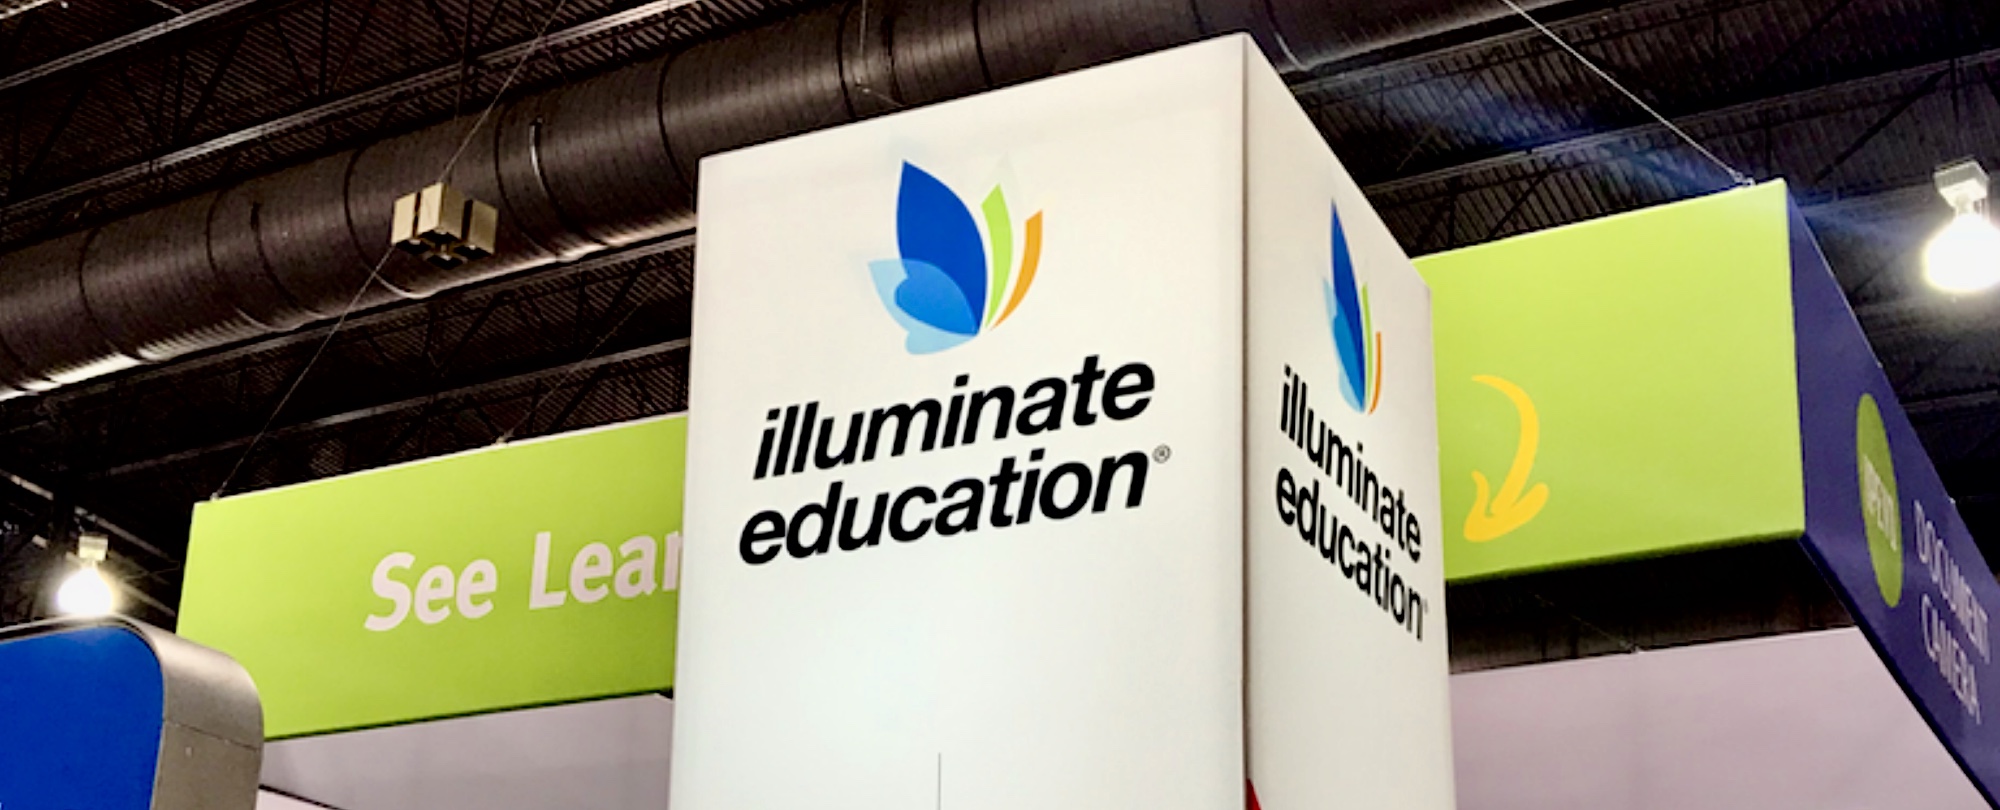 illuminate education software